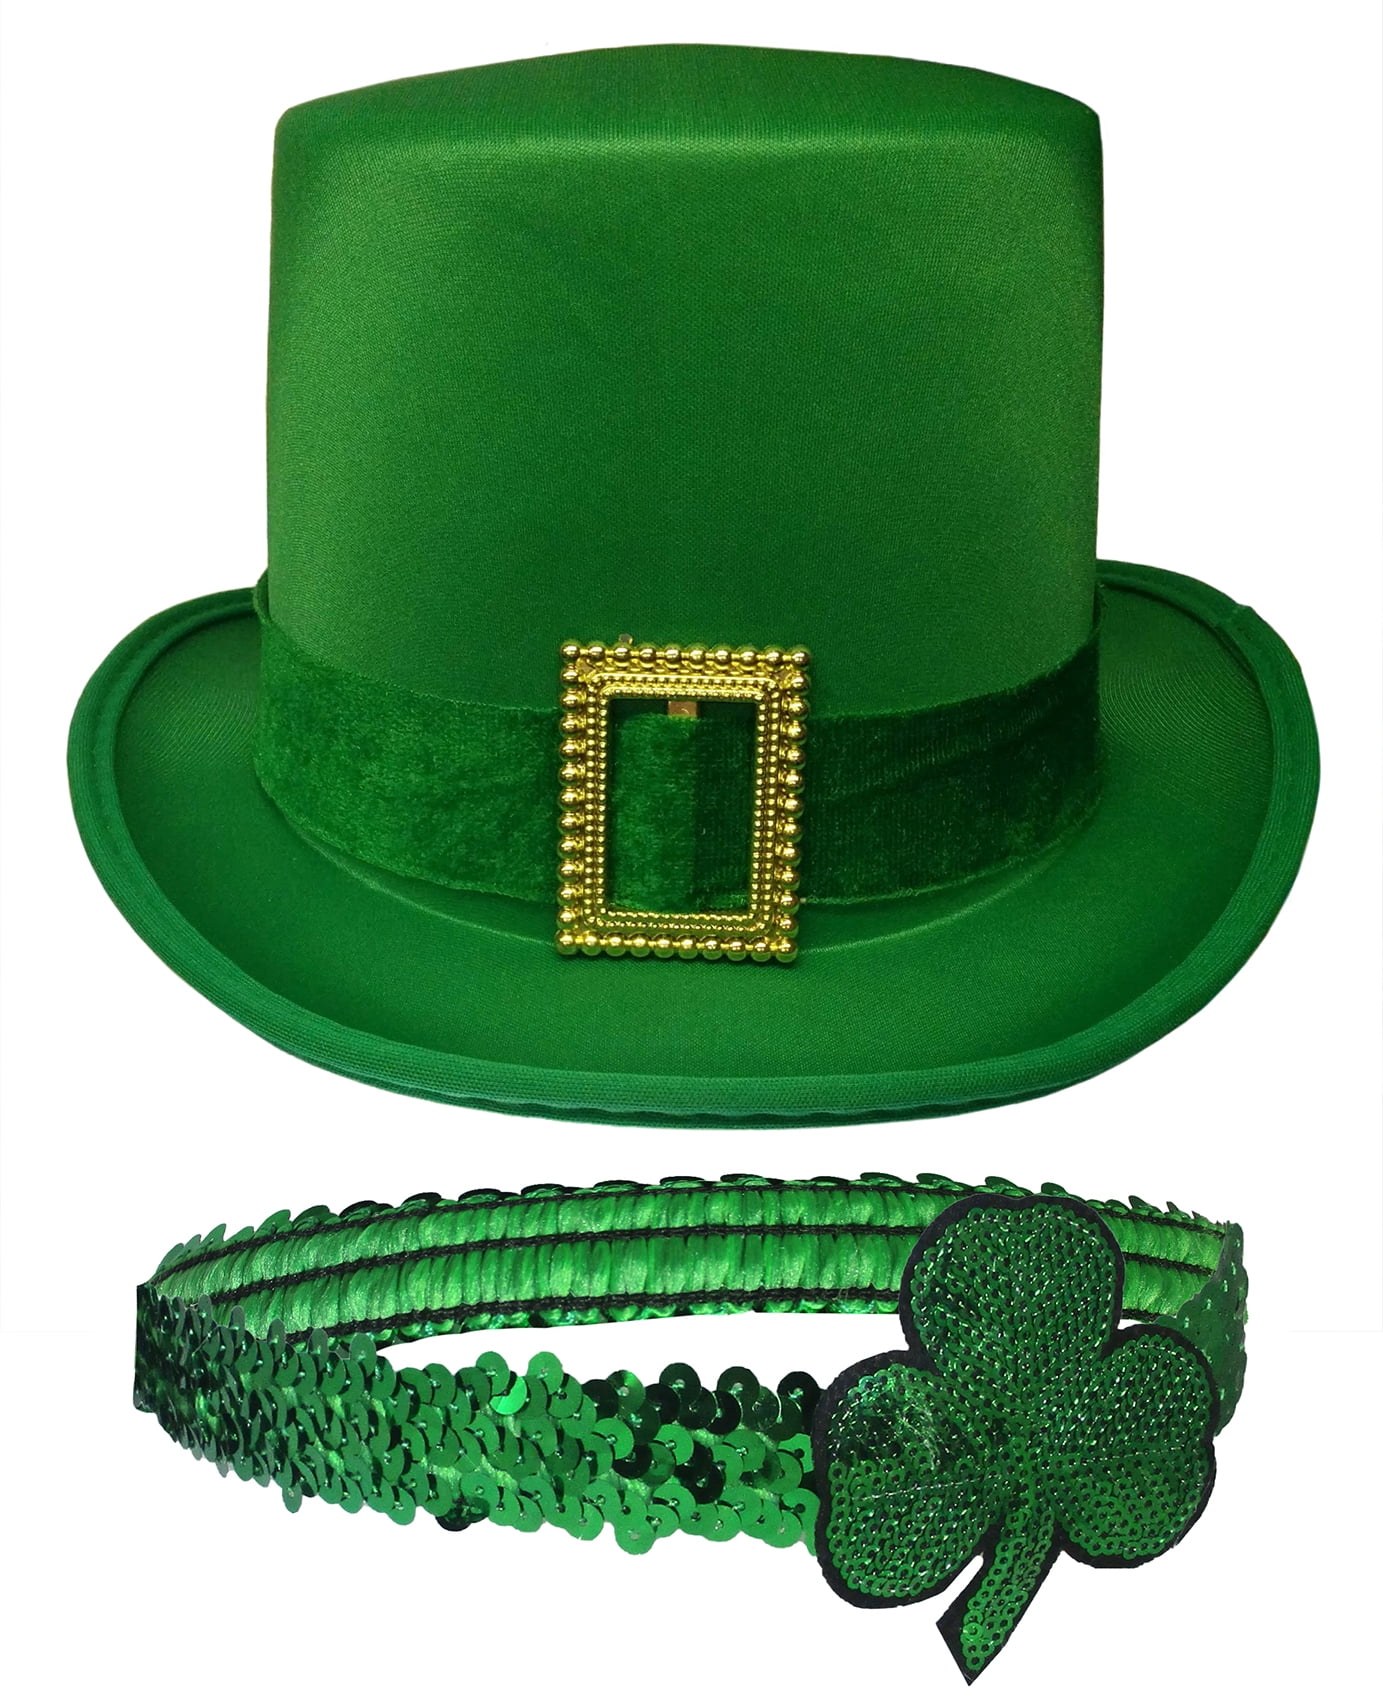 GREEN GLITTER COWBOY HAT WILD WESTERN COWGIRL ST PATRICKS DAY IRISH FANCY DRESS 